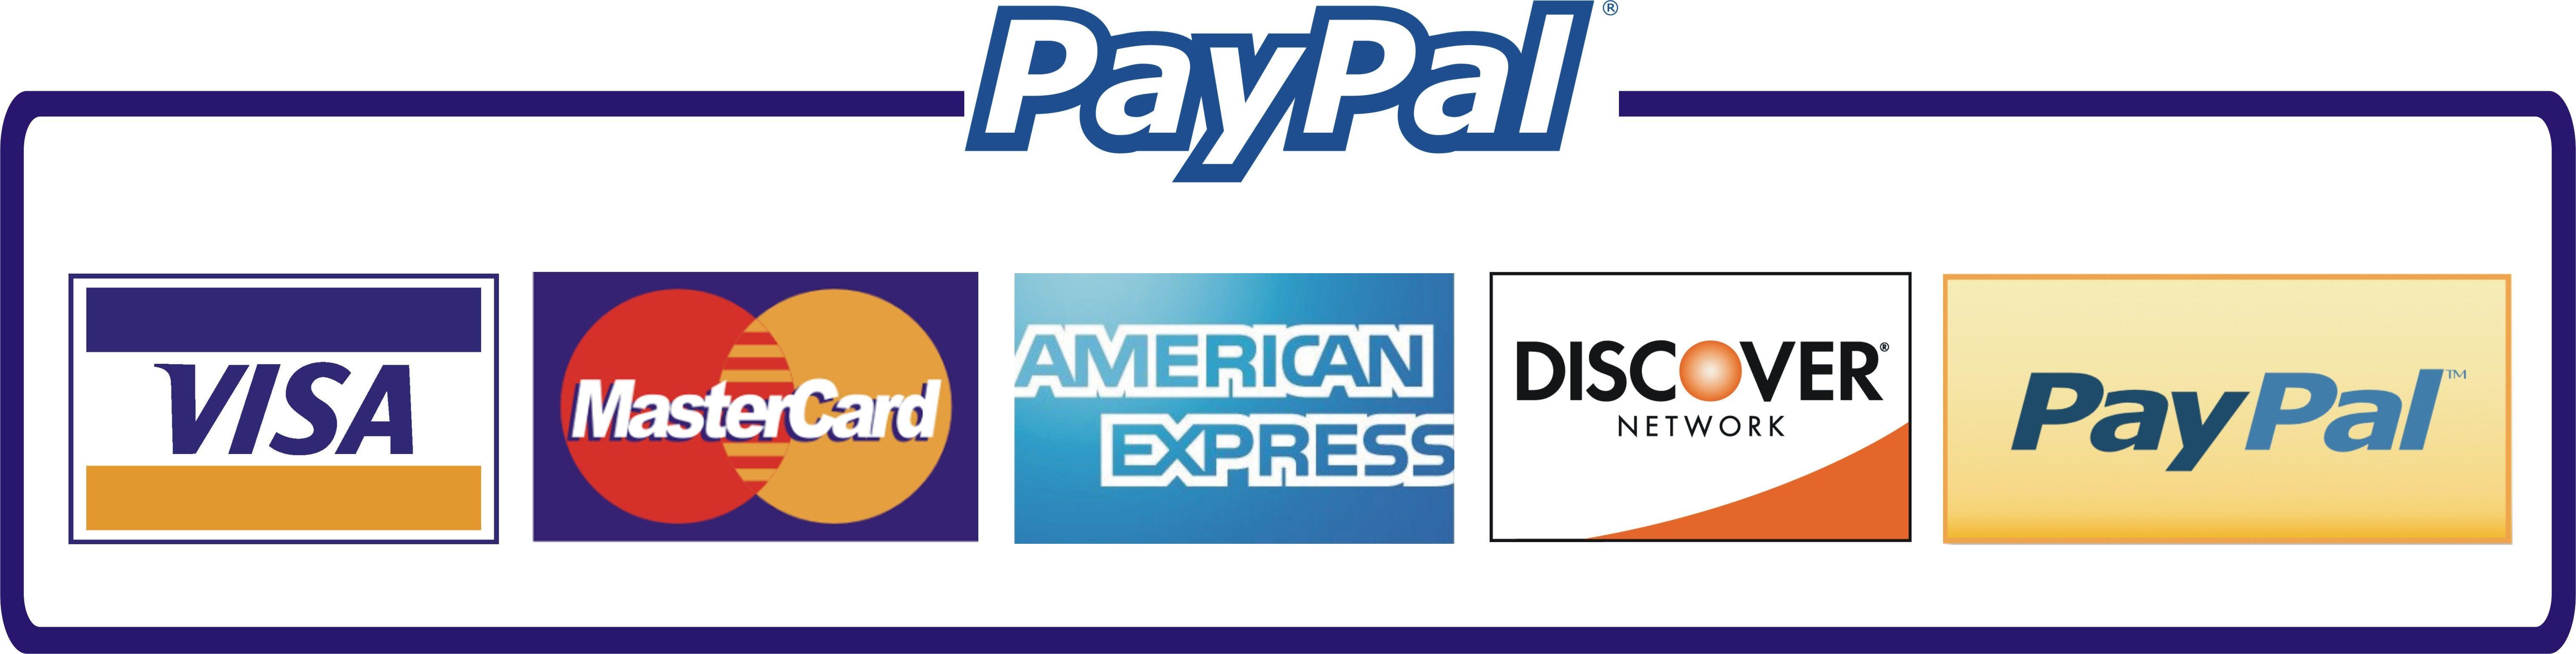 We Accept PayPal Logo - Aromavita | eBay Stores